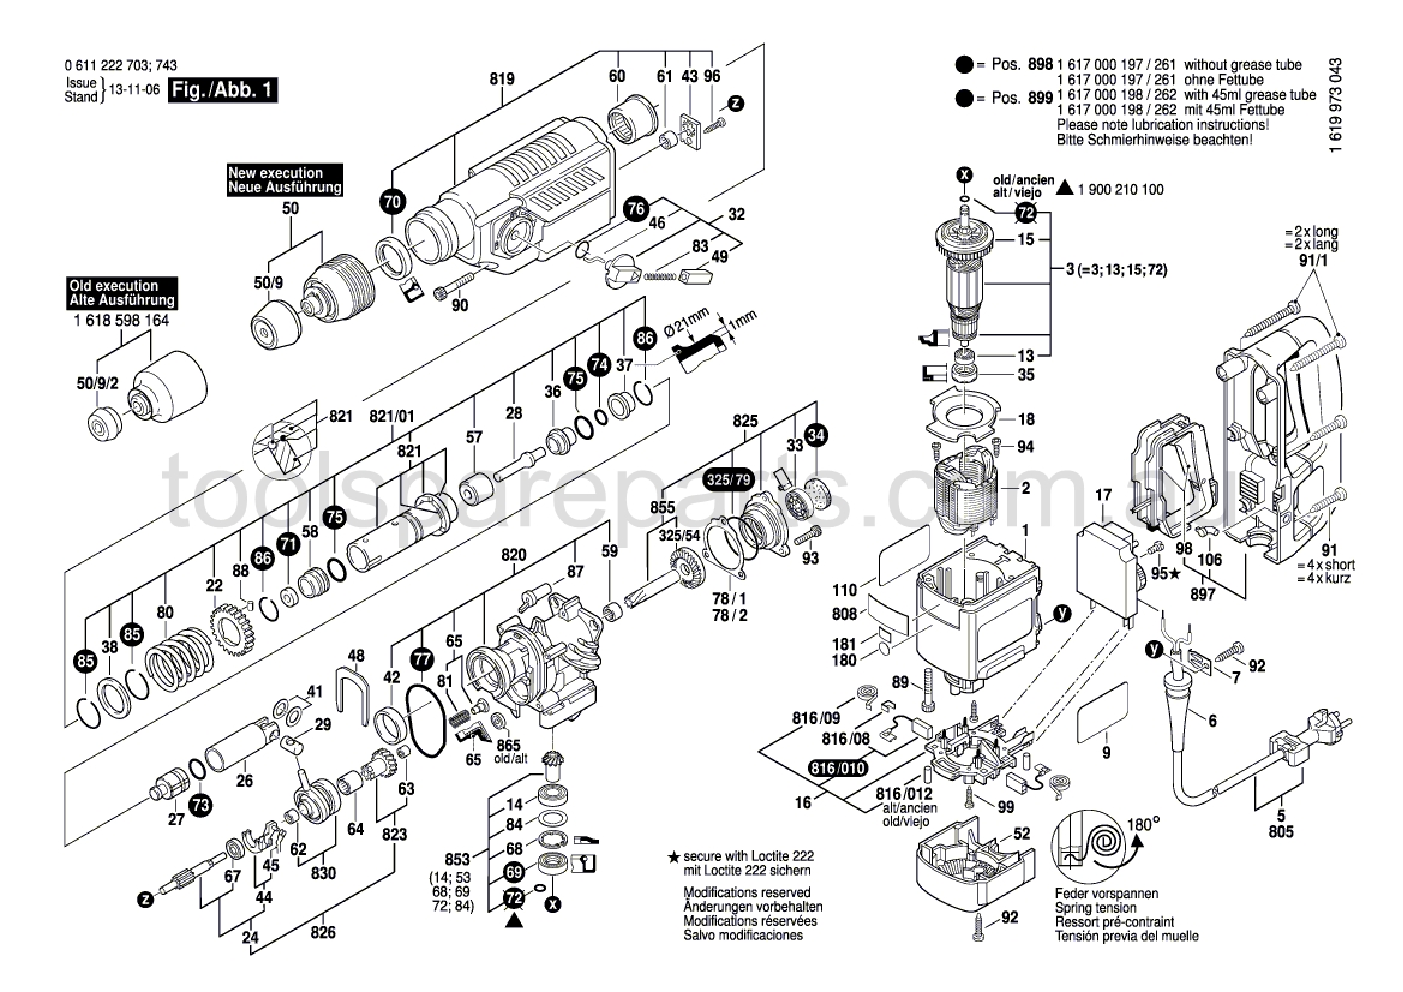 Bosch GBH 4 DSC 0611222737  Diagram 1